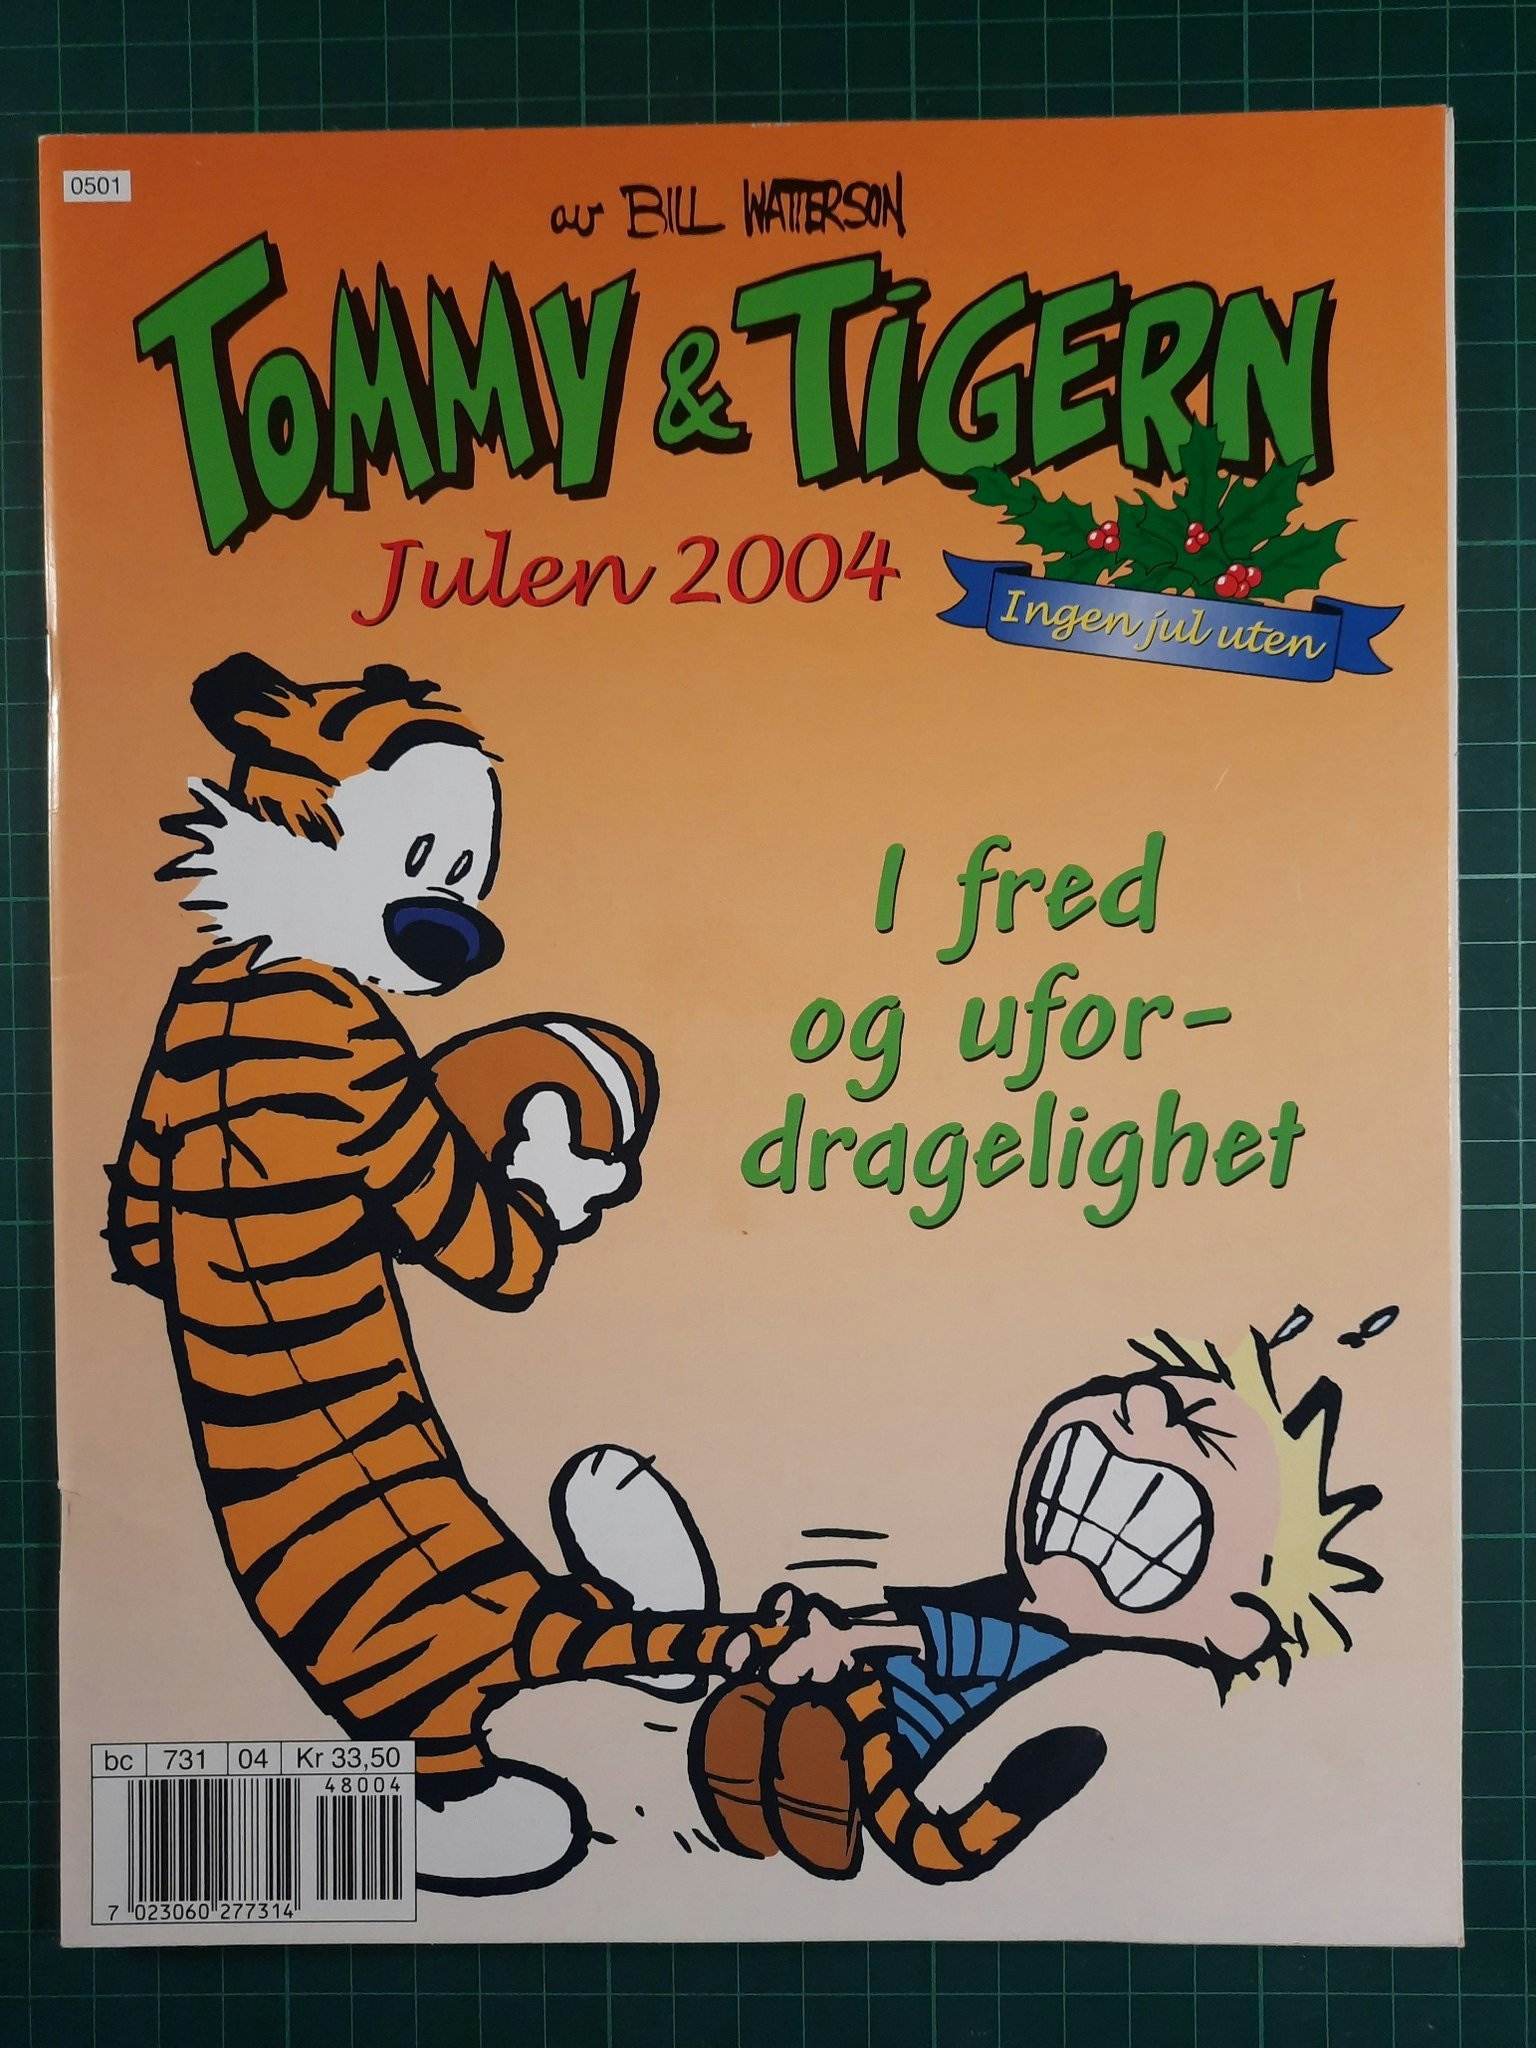 Tommy & Tigern julen 2004